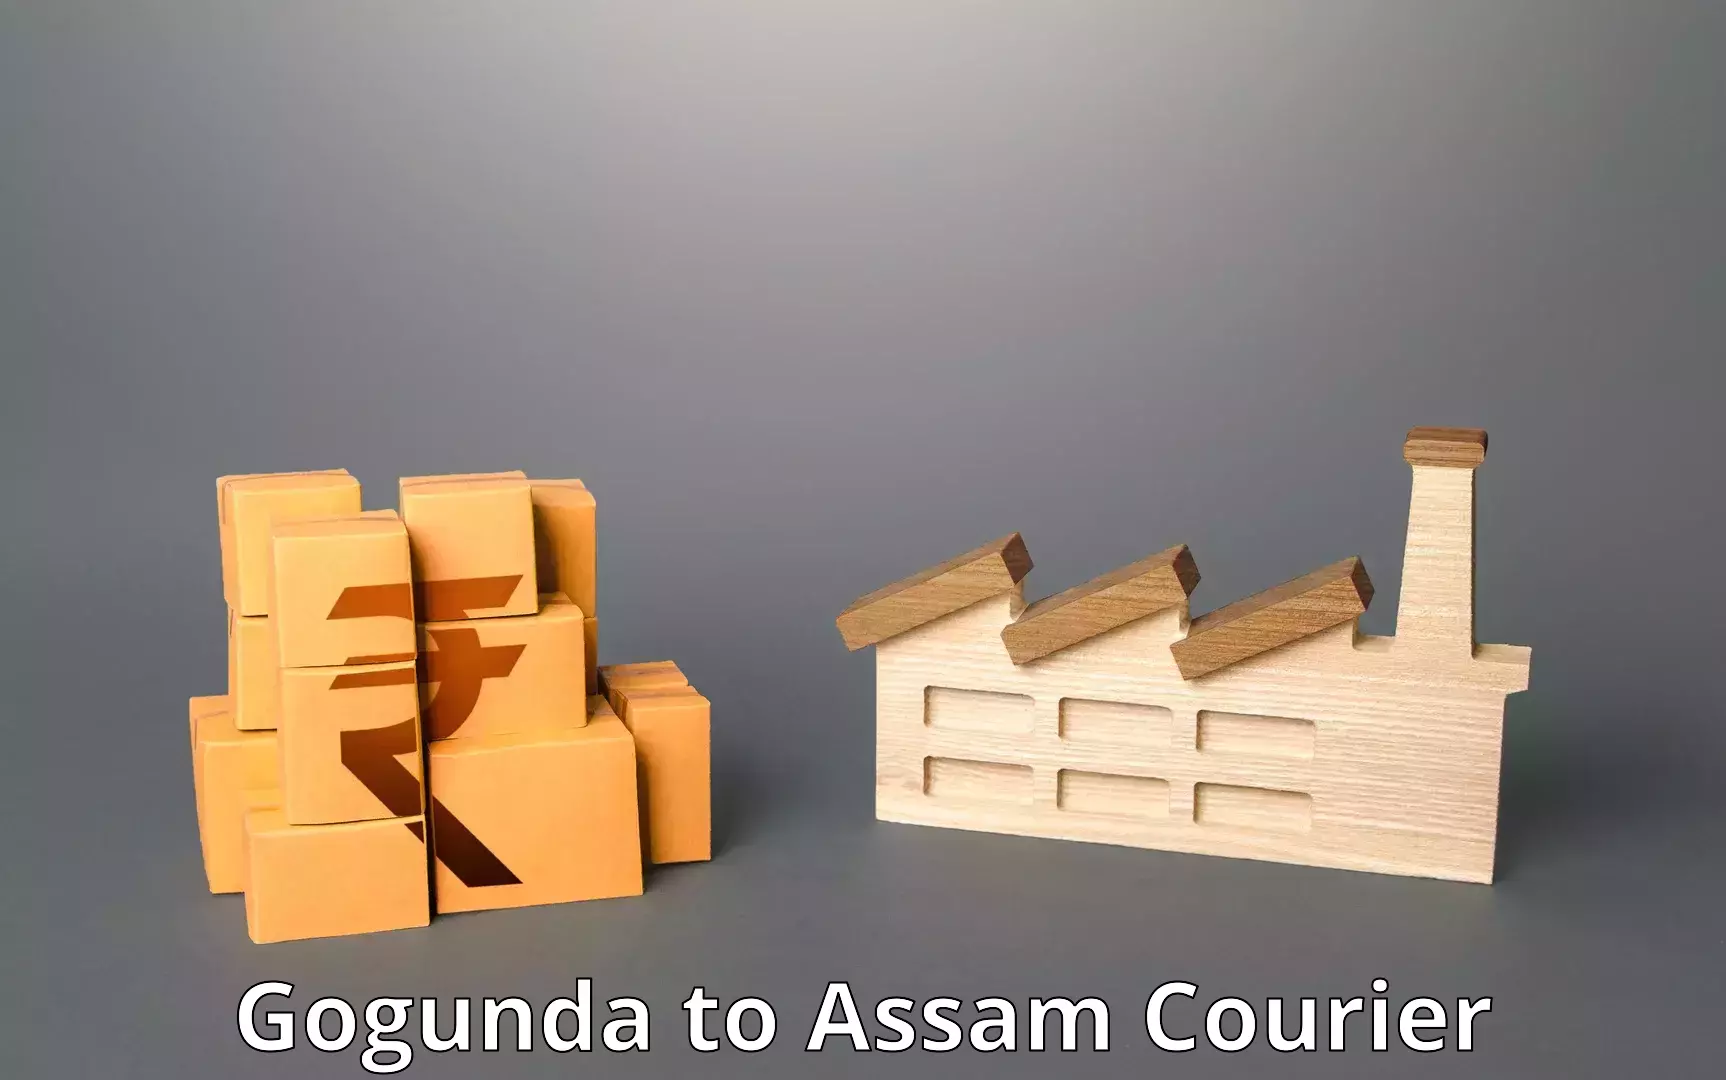 High-performance logistics Gogunda to Lala Assam